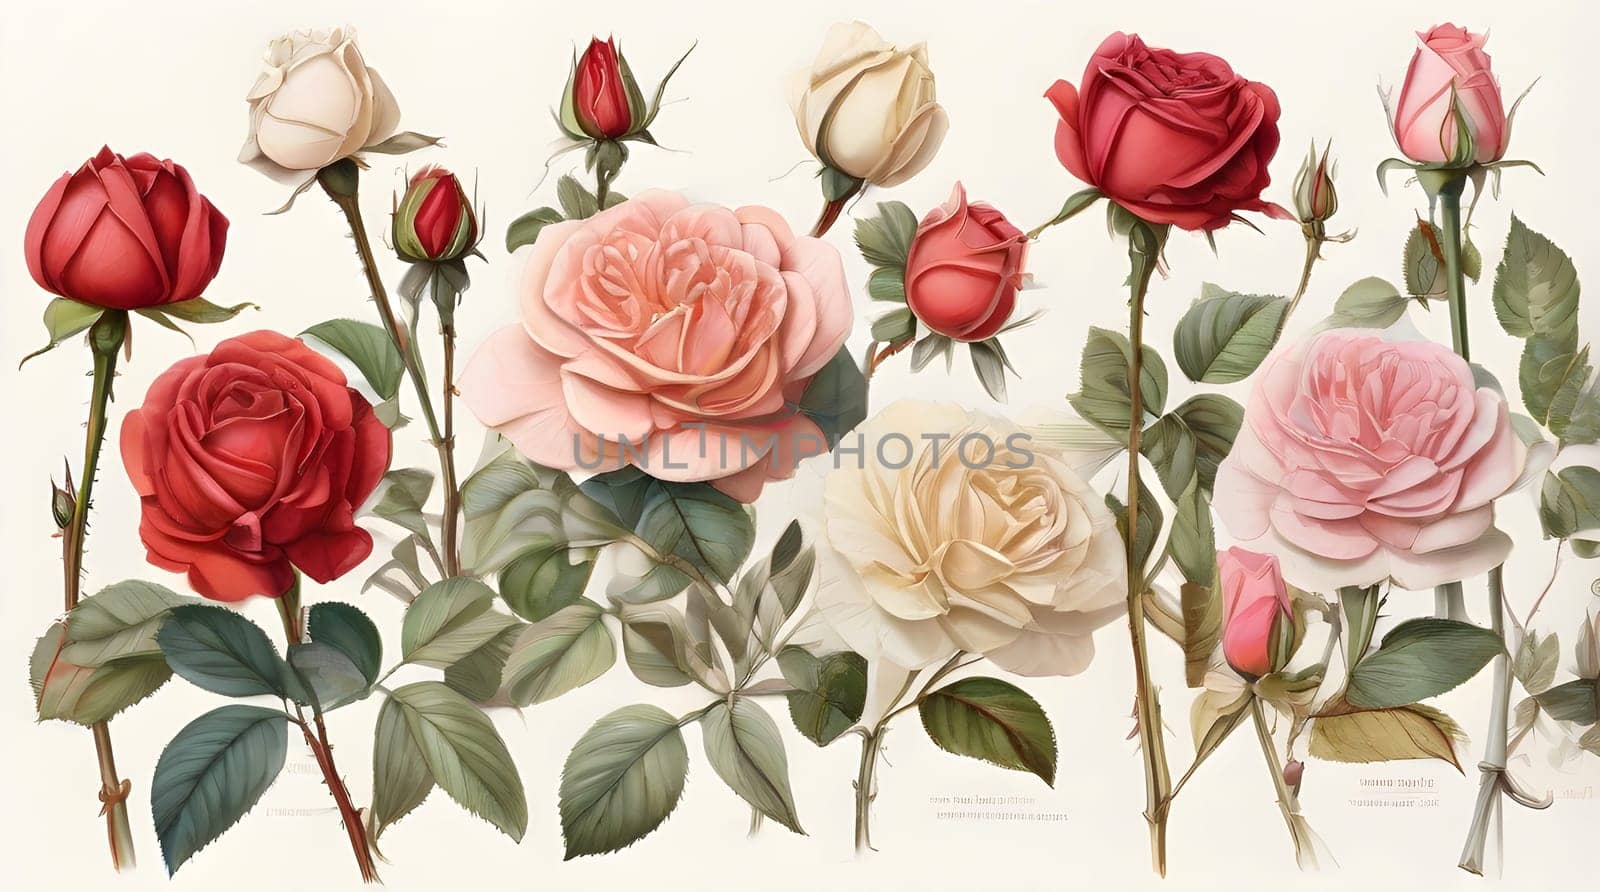 types of roses on white background, botanical illustration by andre_dechapelle